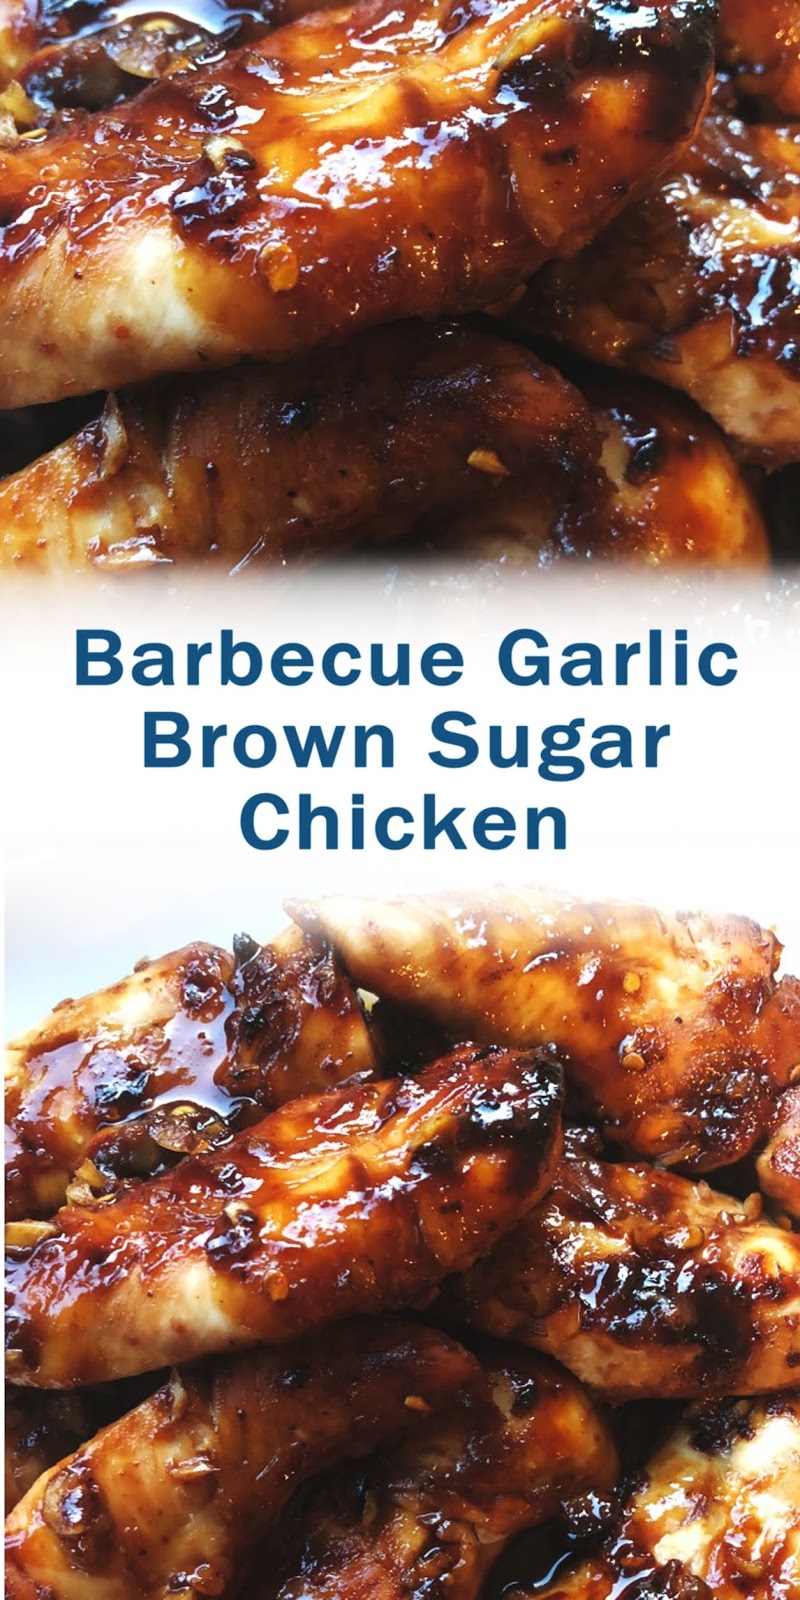 Barbecue Garlic Brown Sugar Chicken